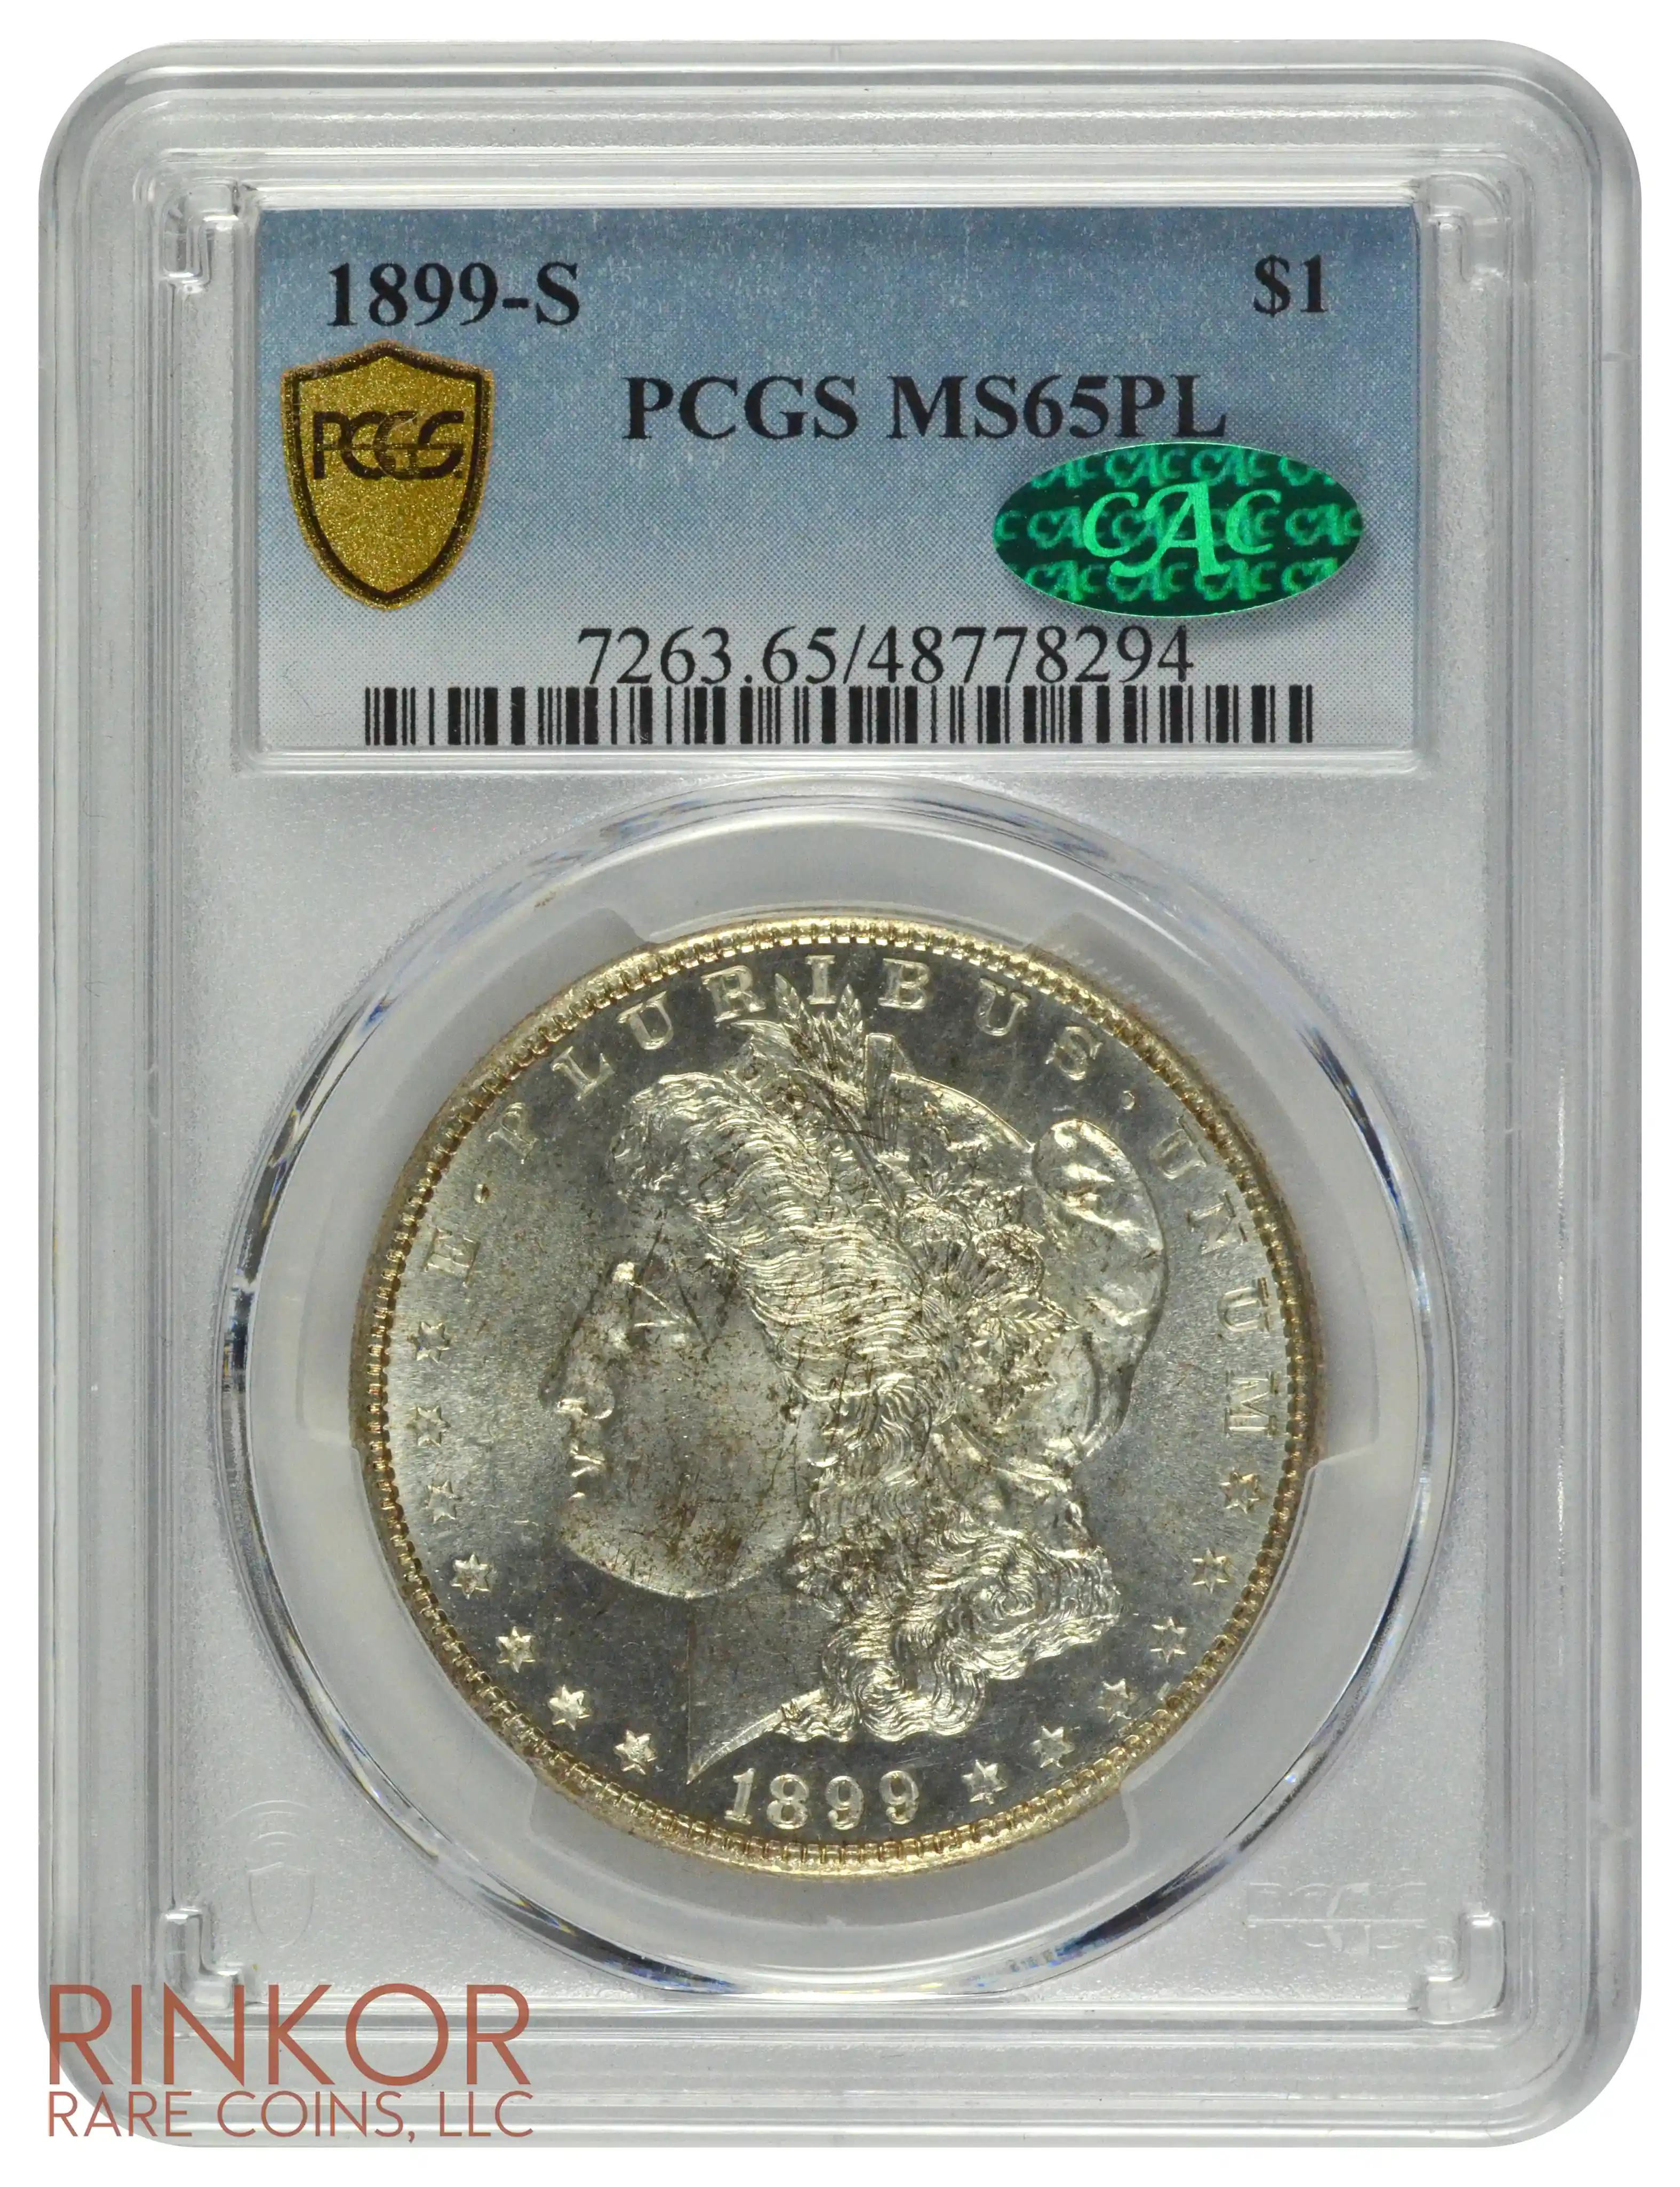 1899-S $1 PCGS MS 65 PL CAC